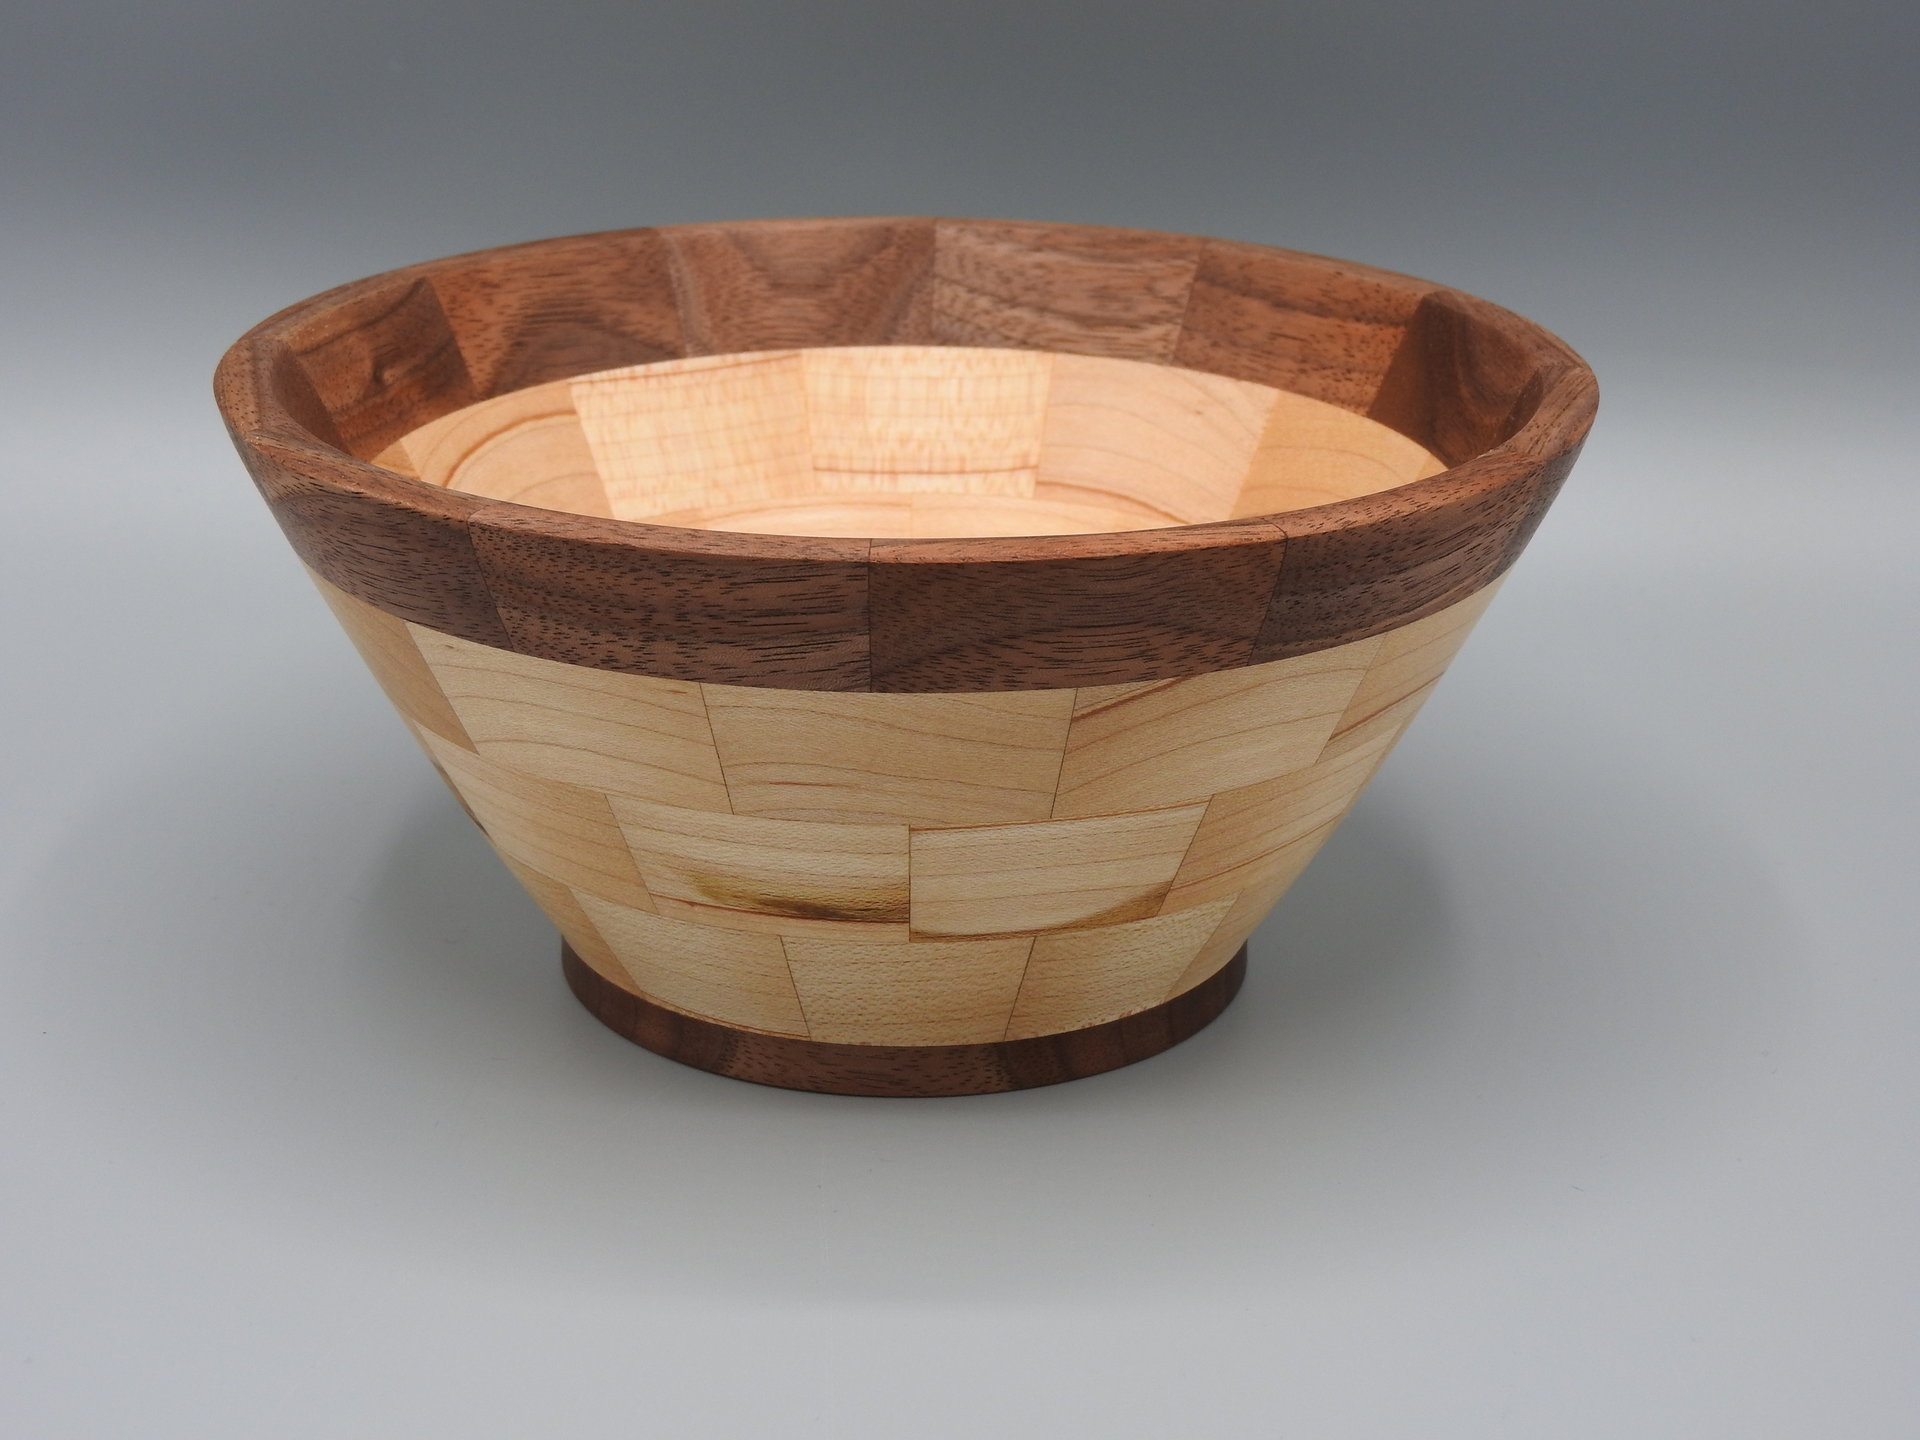 Walnut and Maple Segmented Bowl